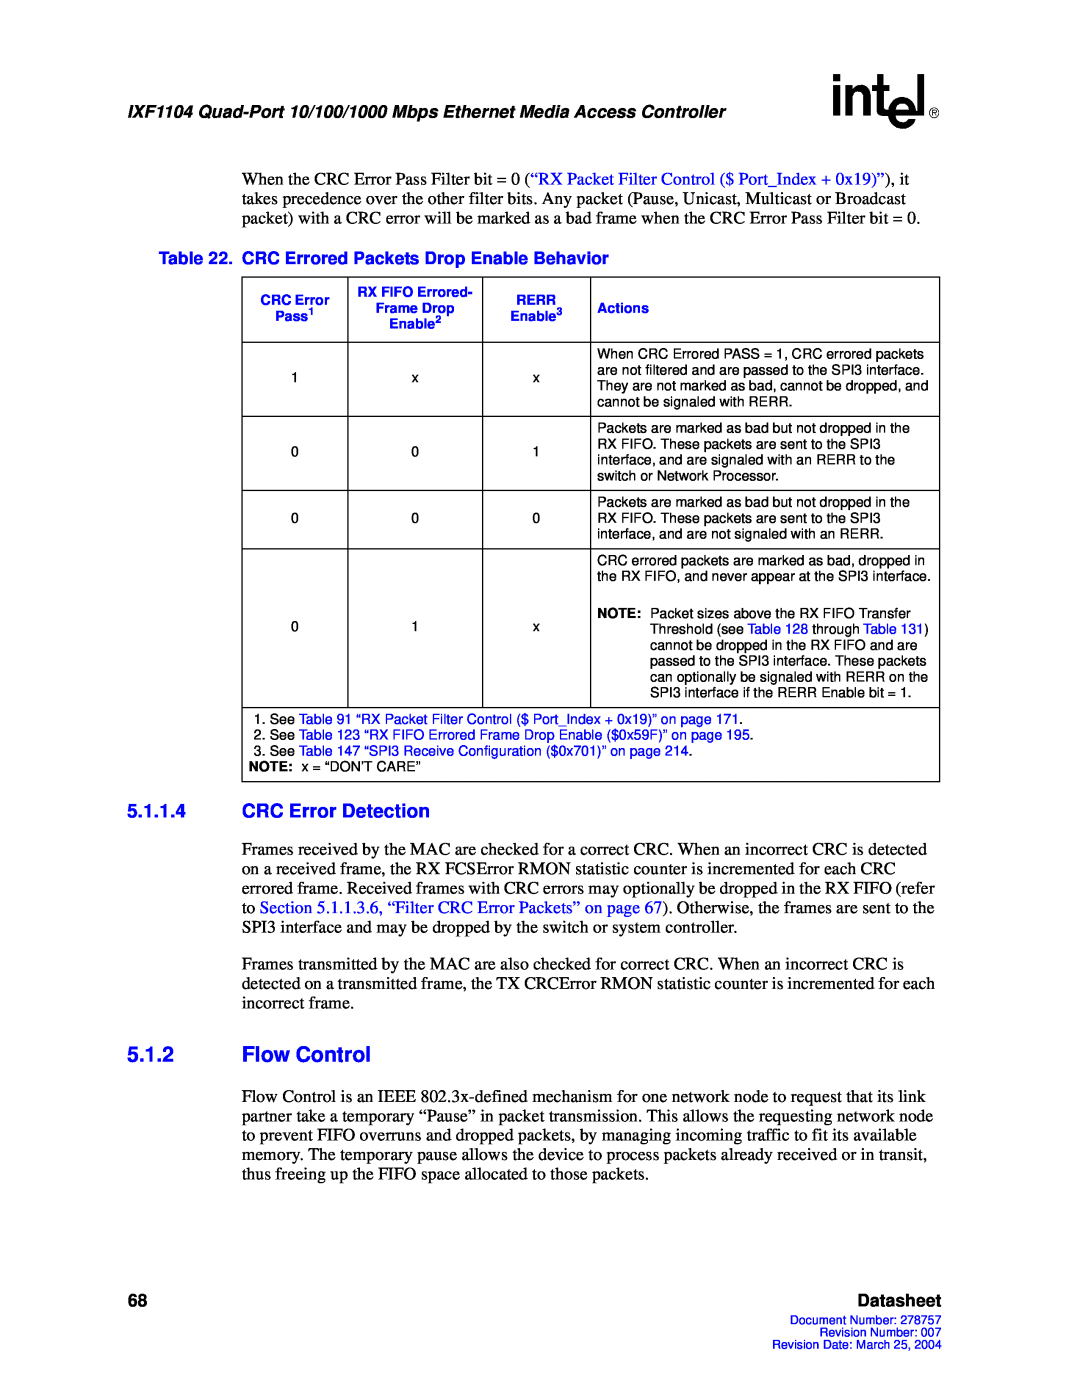 Intel IXF1104 manual 5.1.2Flow Control, 5.1.1.4CRC Error Detection, Datasheet 